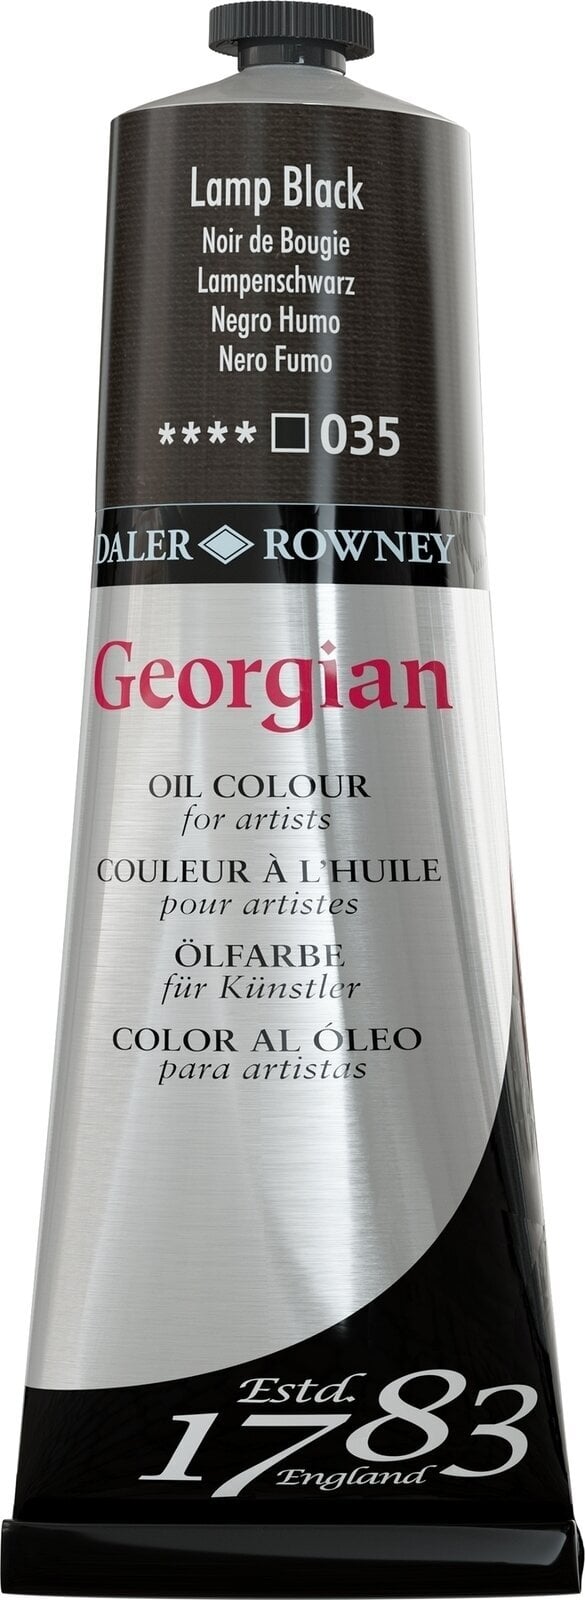 Oil colour Daler Rowney Georgian Oil Paint Lamp Black 225 ml 1 pc